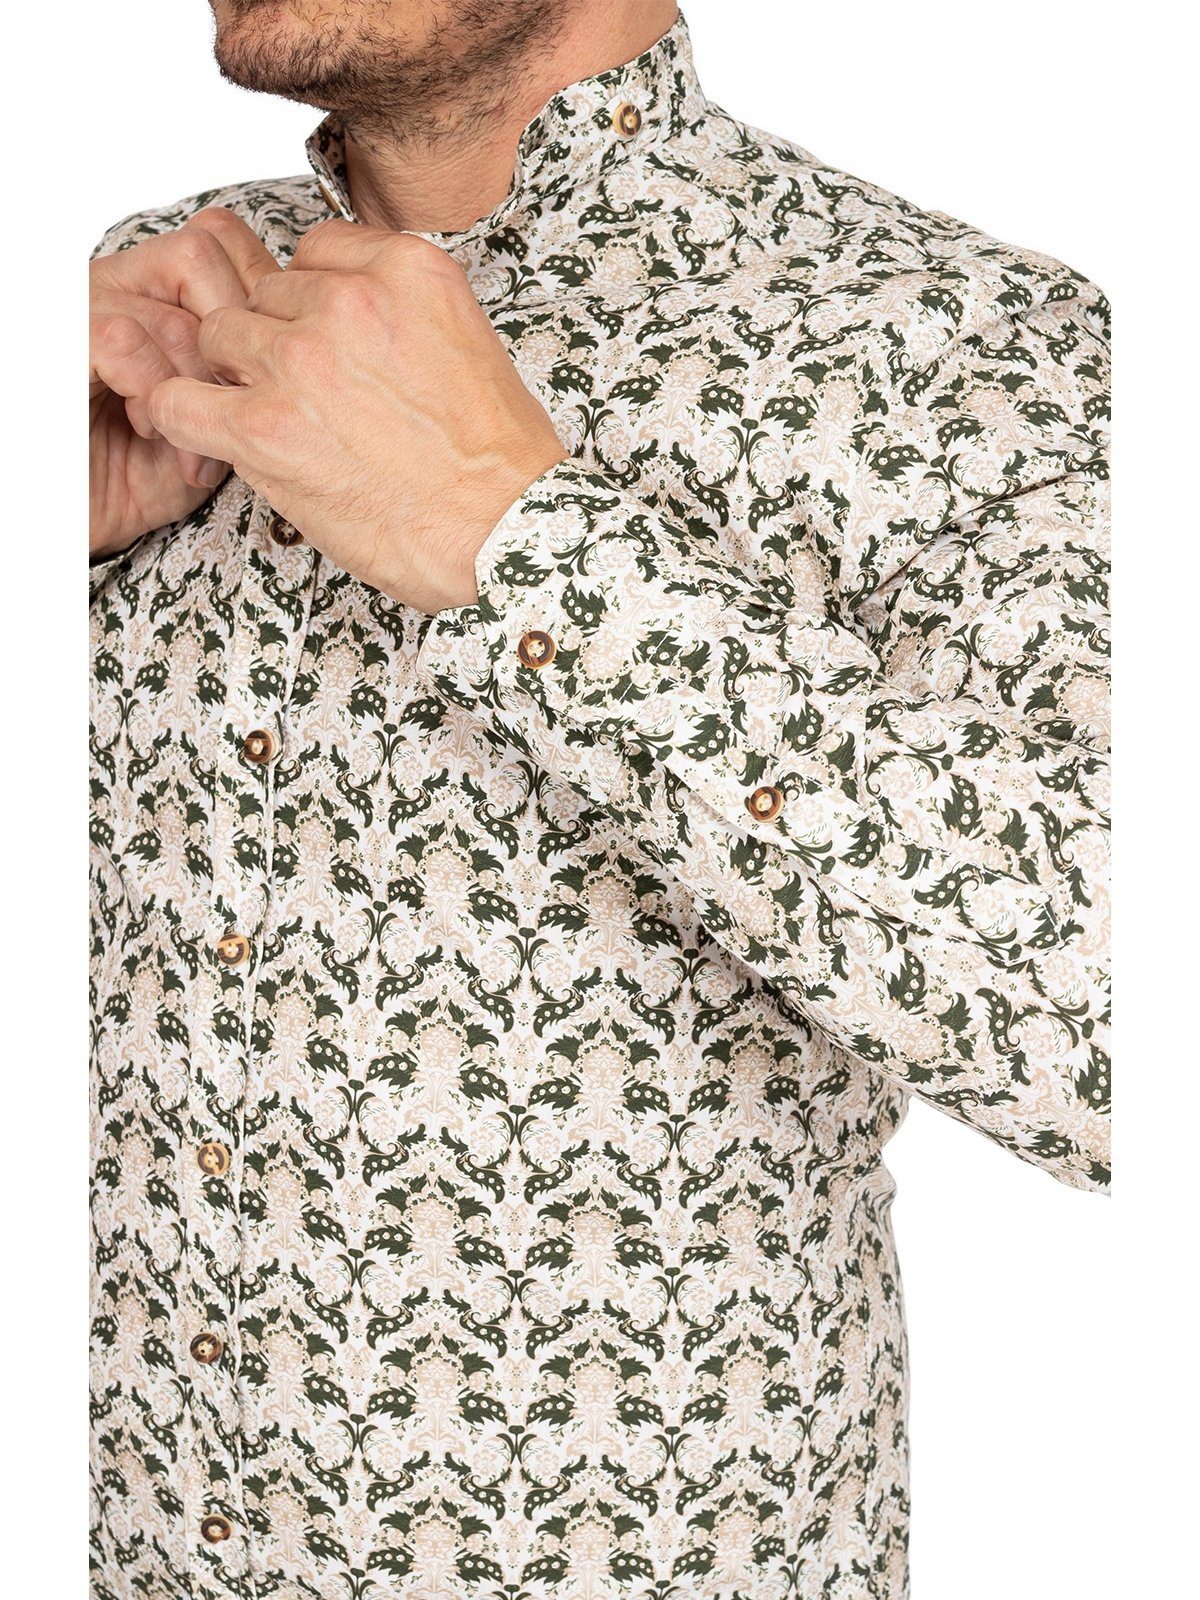 Gipfelstürmer Fi 420000-4147-57 Stehkragen Trachtenhemd dunkelgrün (Slim Hemd